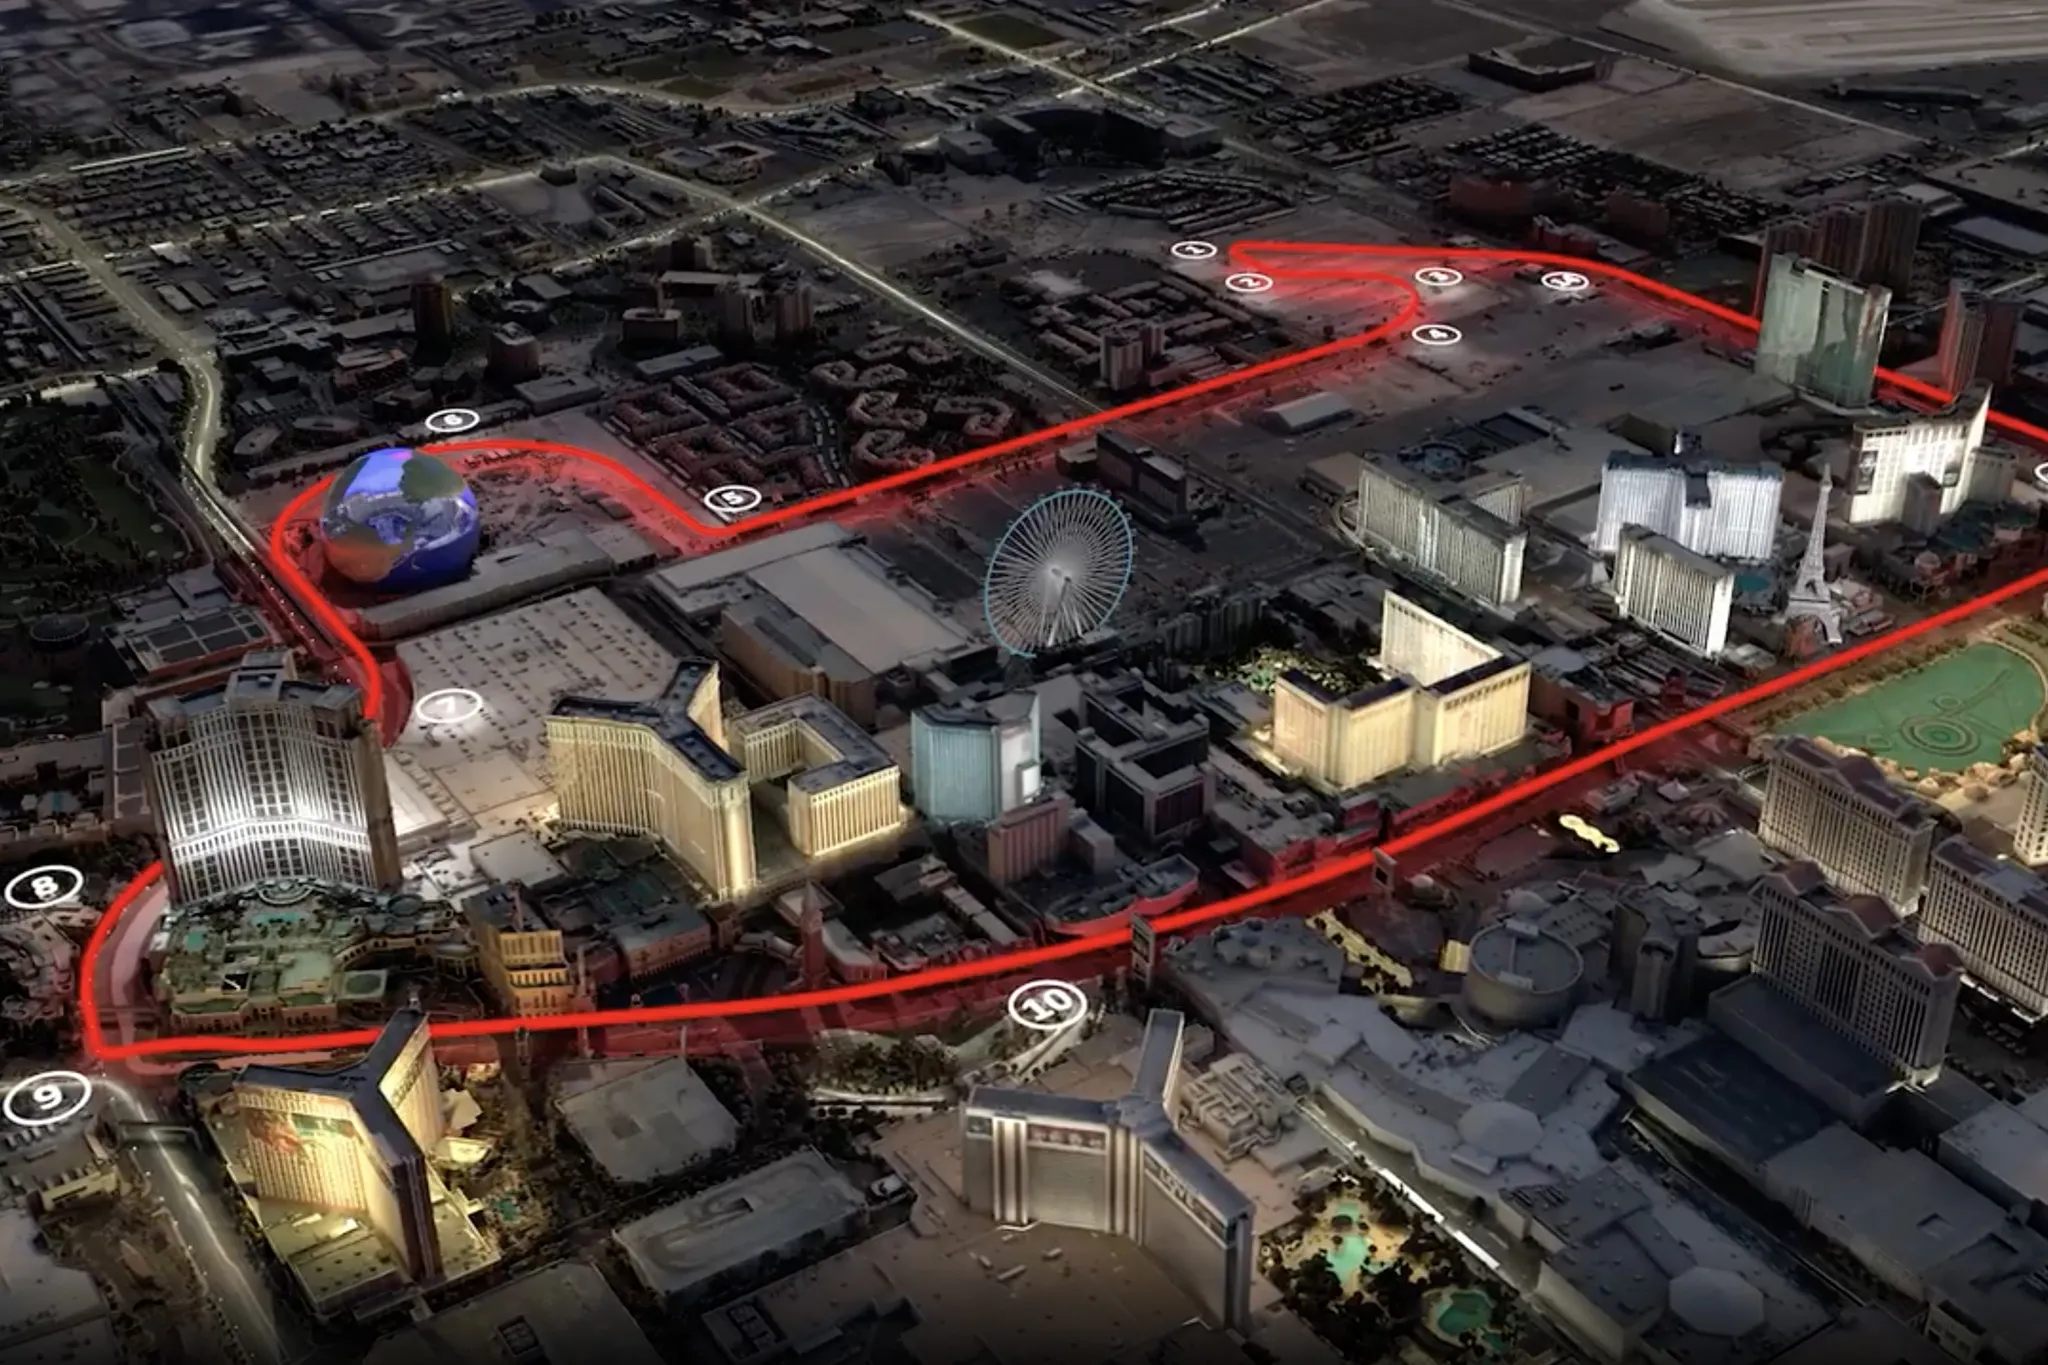 See the tentative circuit design for the F1 Las Vegas Grand Prix in 2023